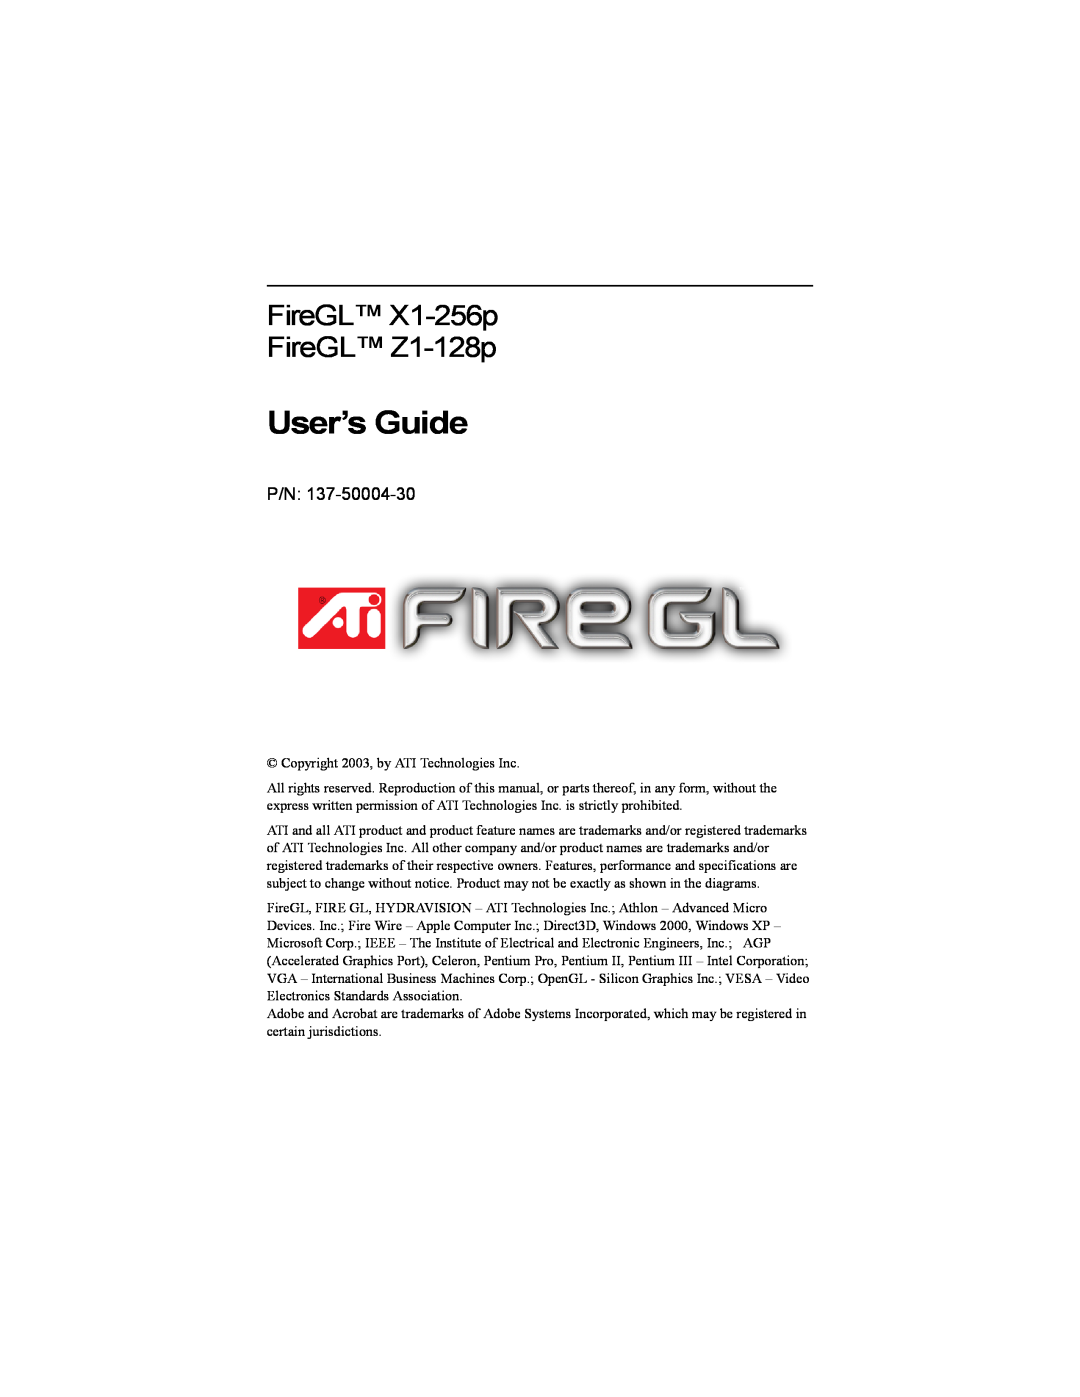 ATI Technologies X1-256P specifications User’s Guide, FireGL X1-256p FireGL Z1-128p 